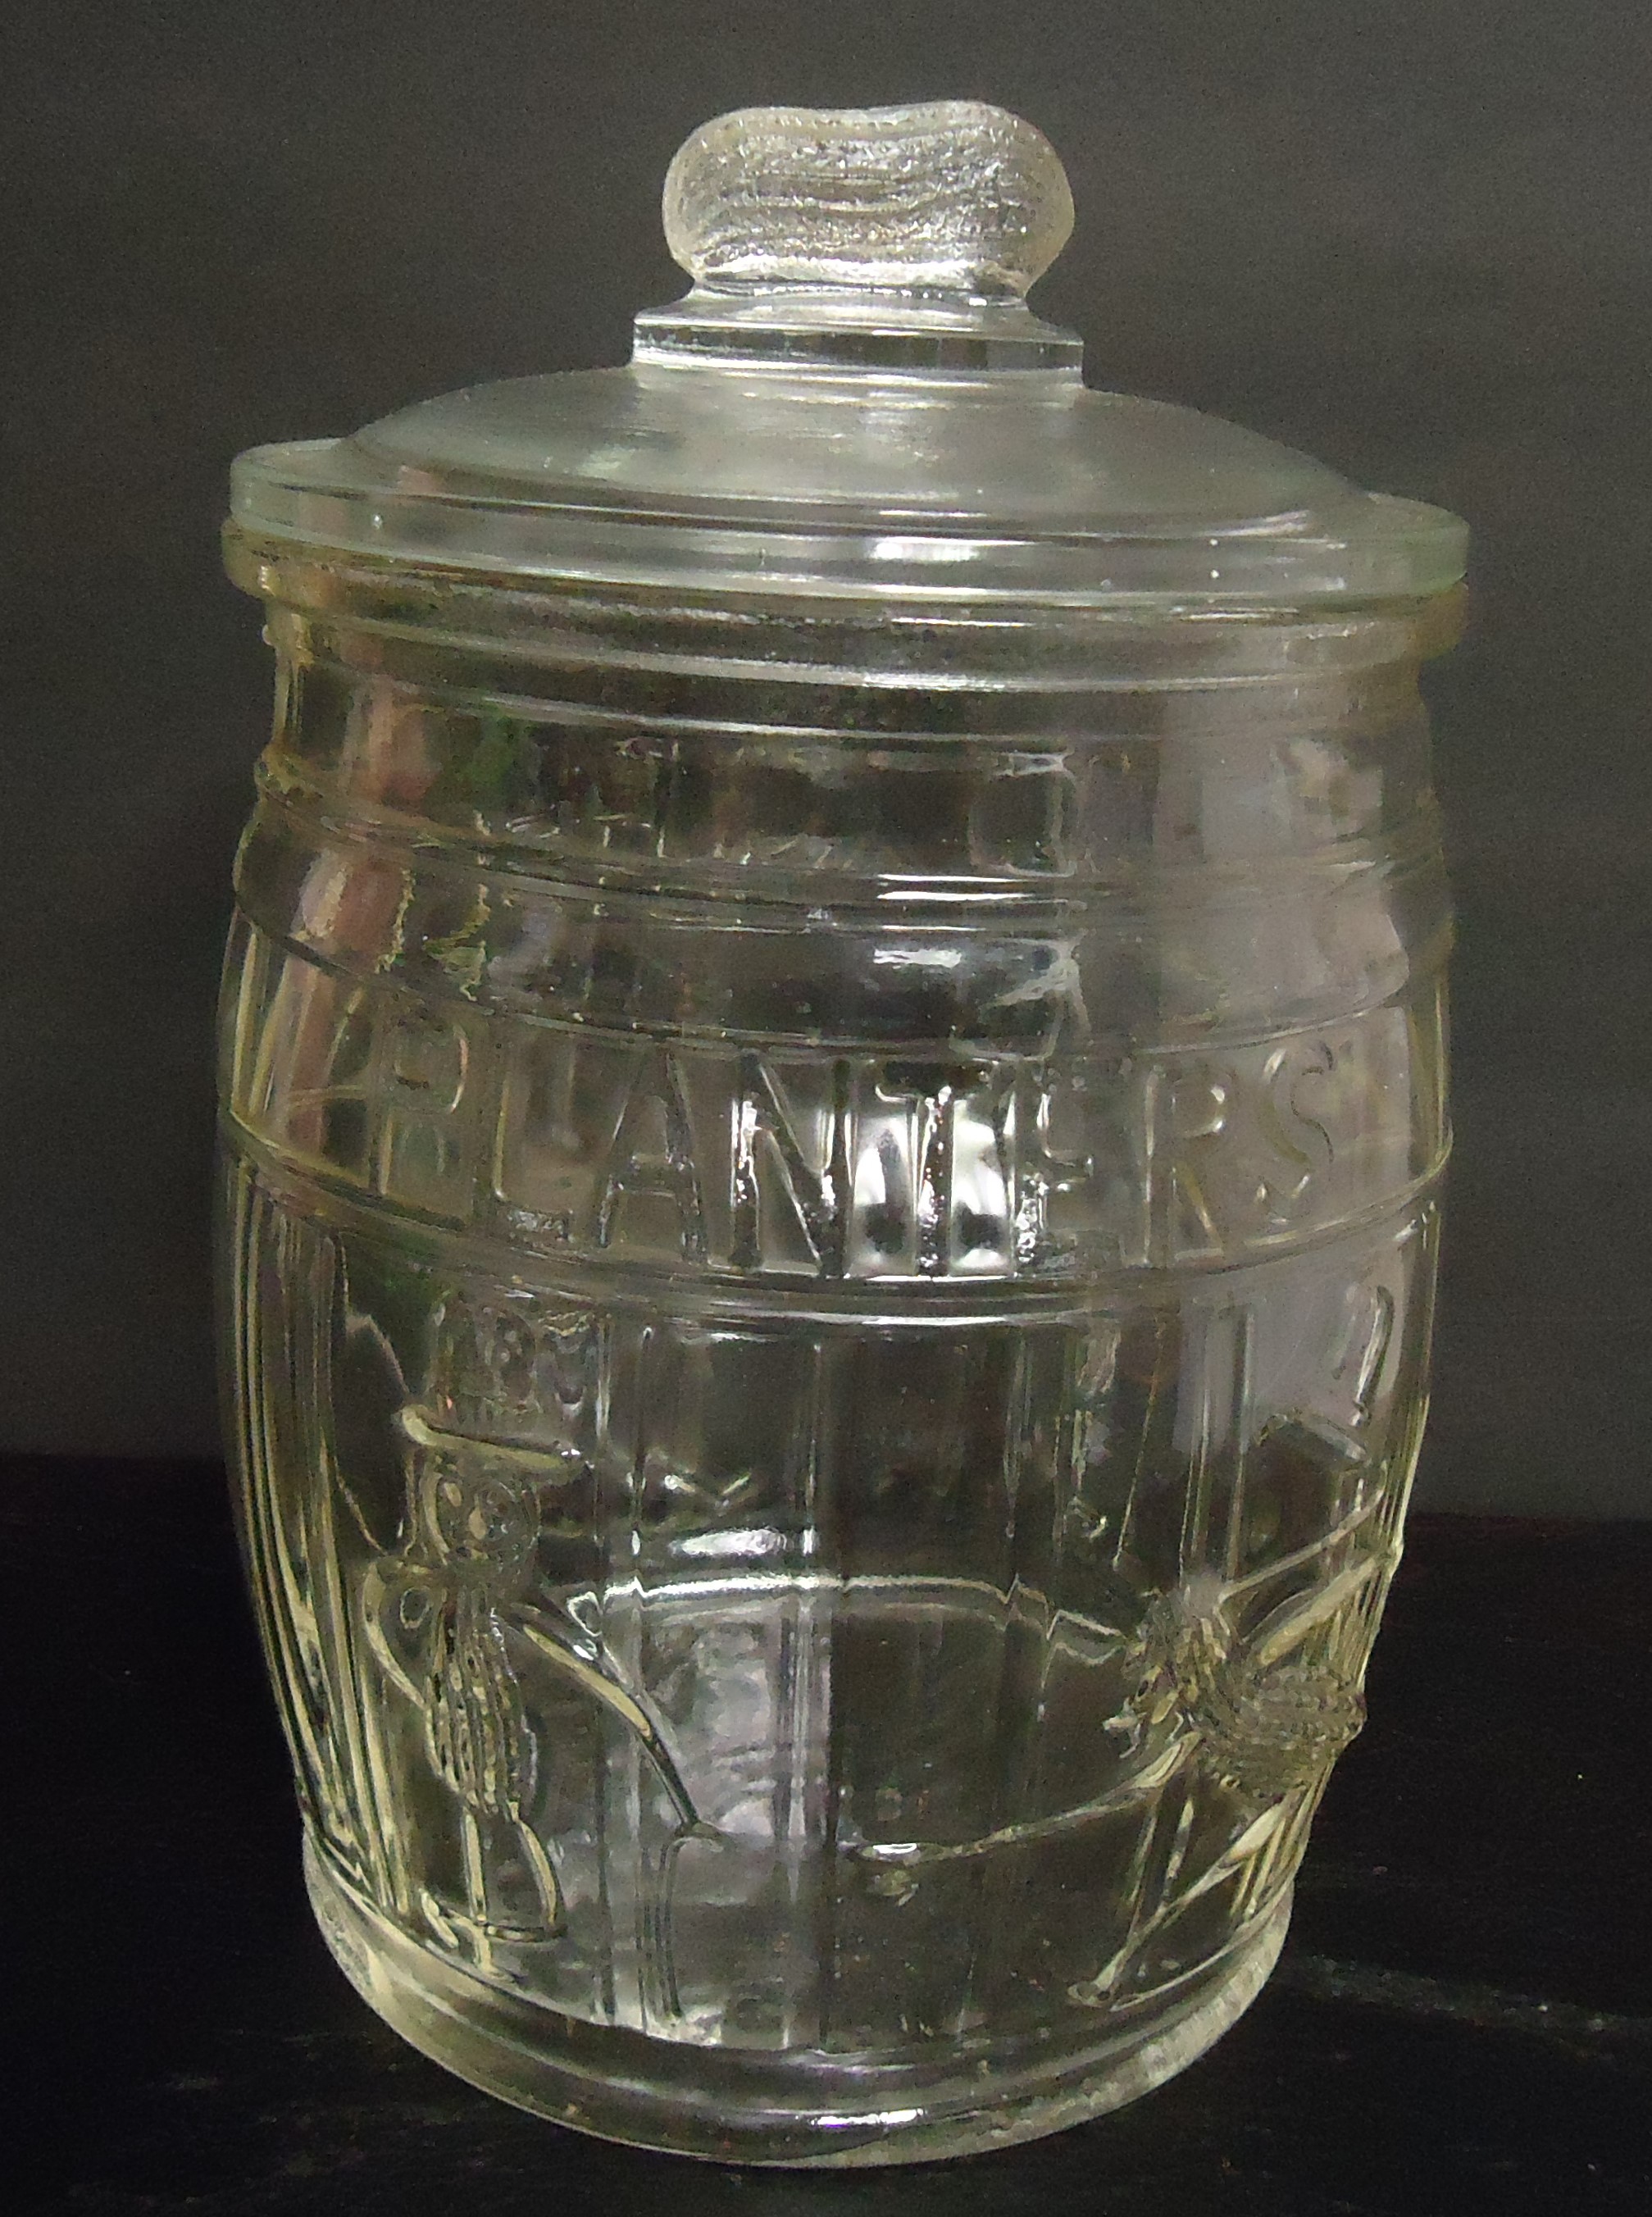 (9) "Planter" Running Man"
Peanut (Clear Glass) Barrel Jar
$75.00